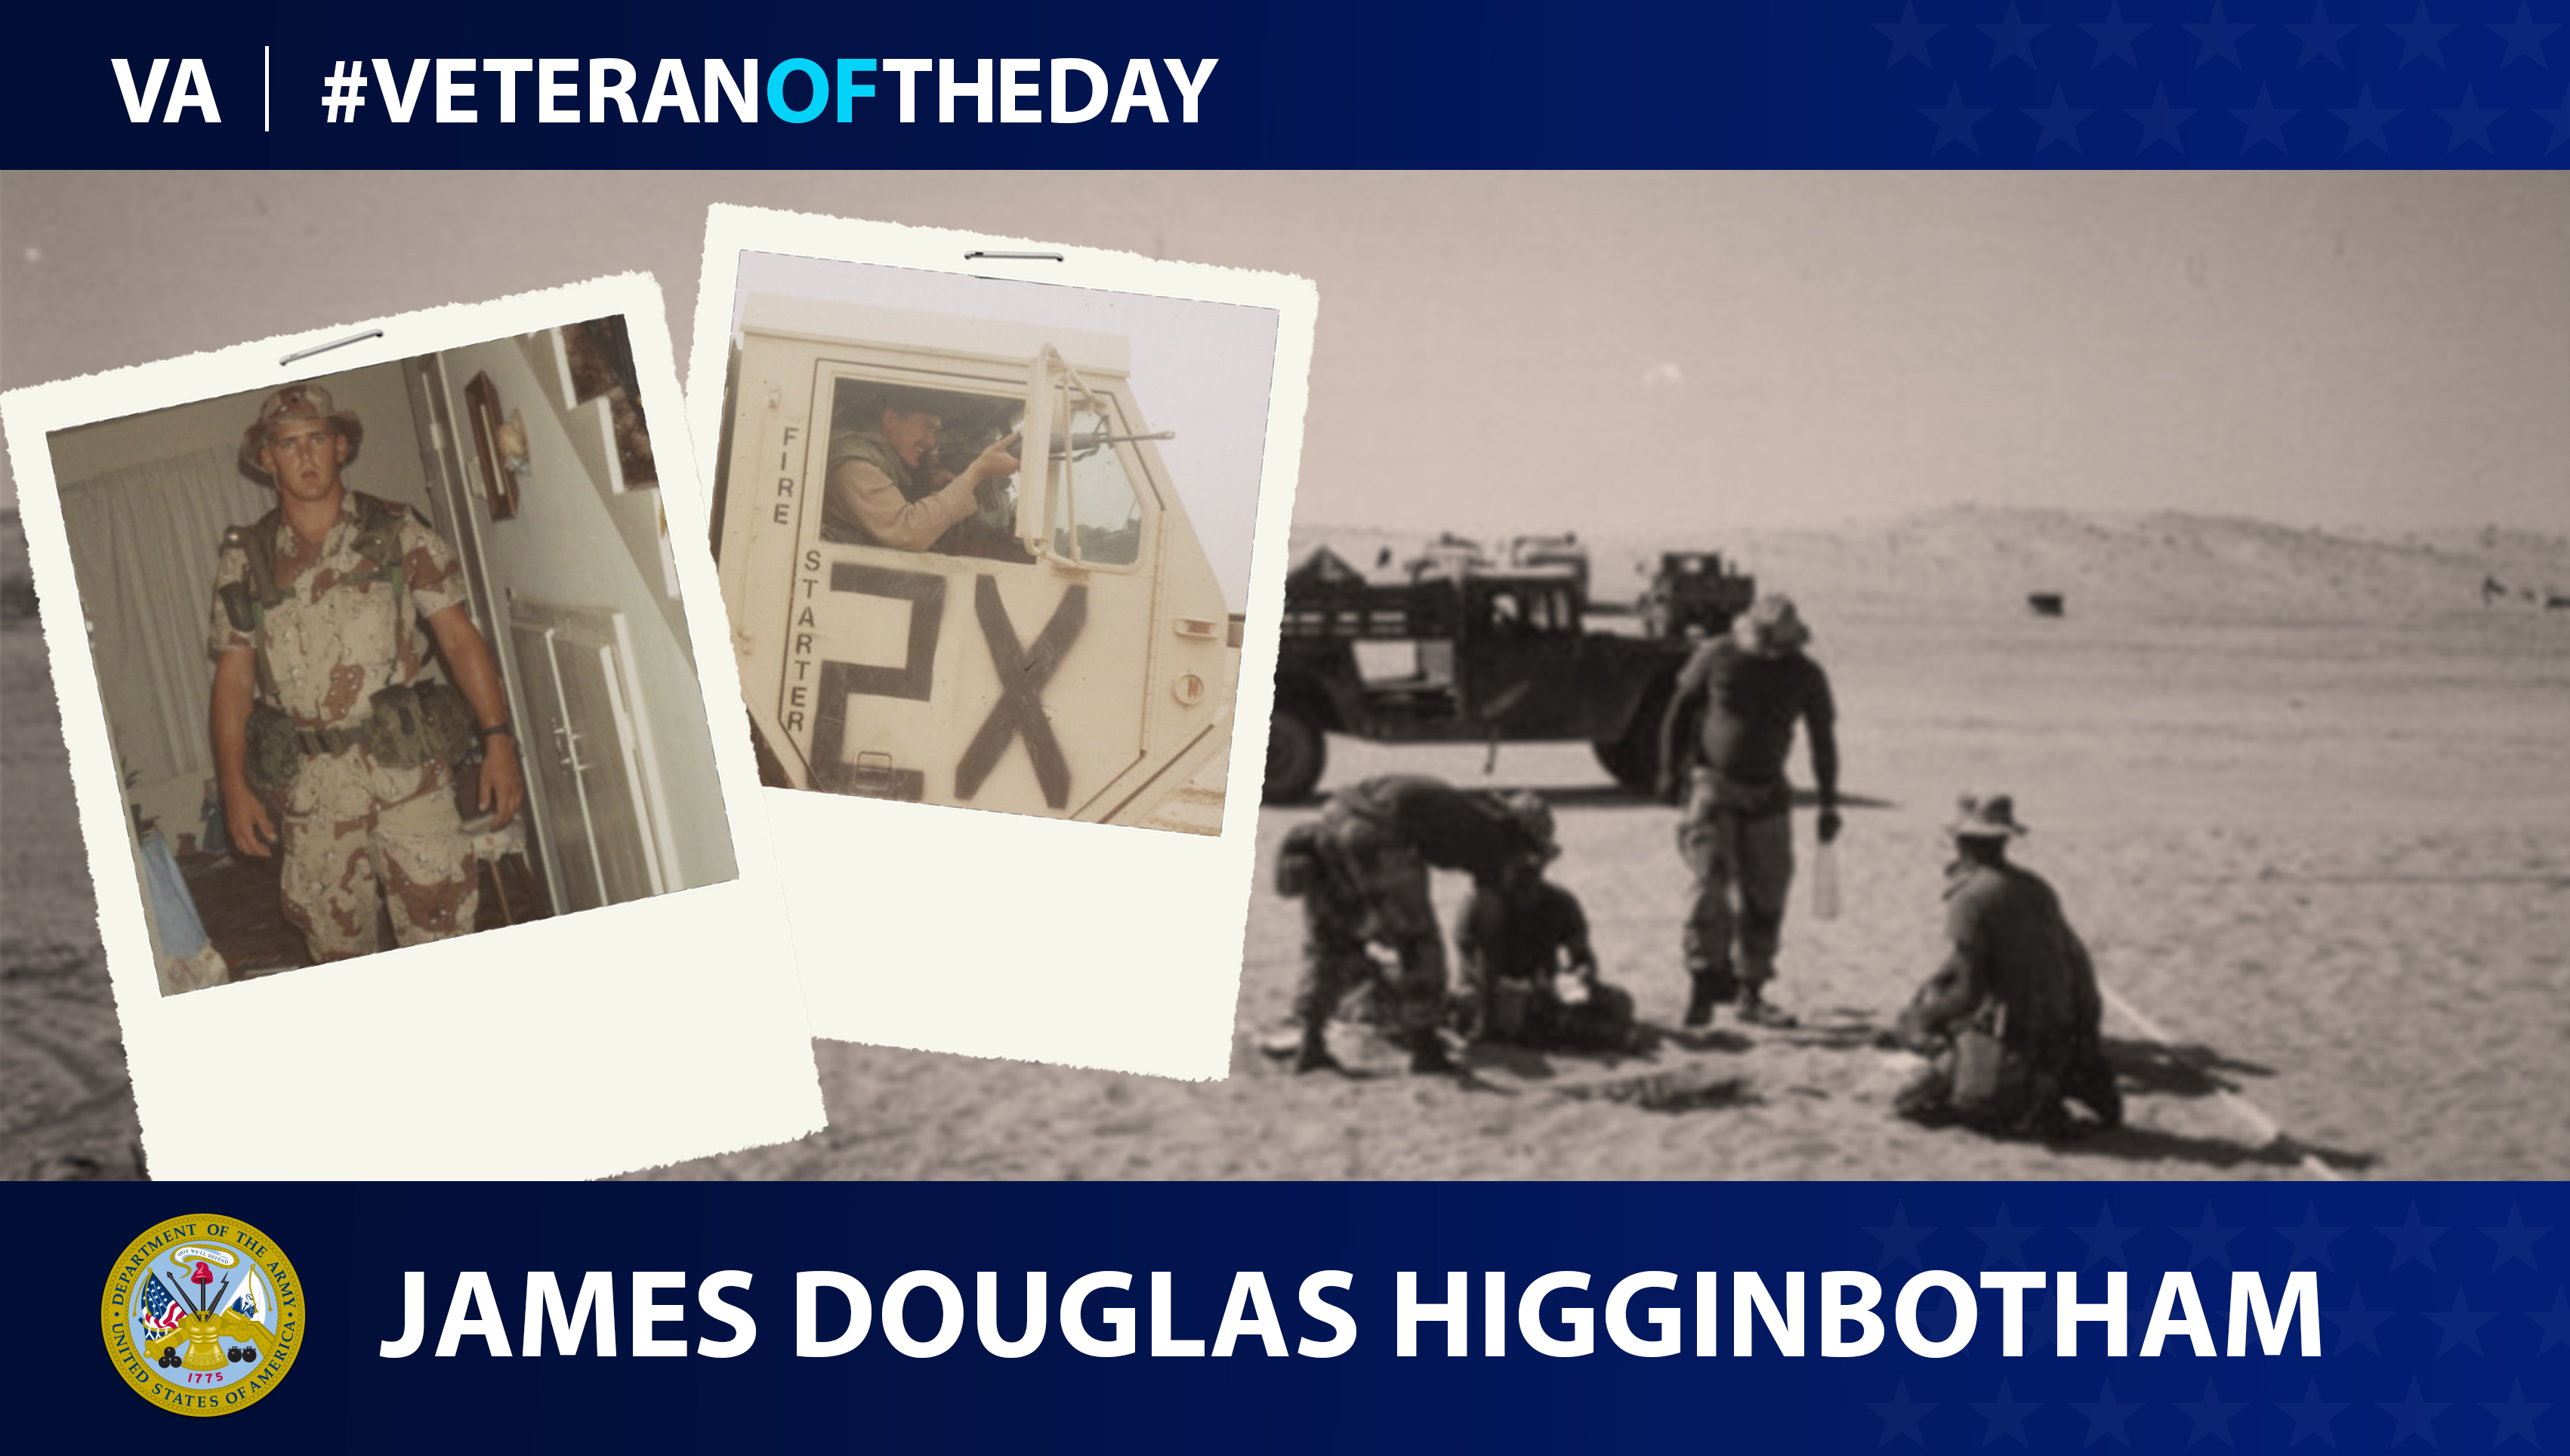 Army Veteran James Douglas Higginbotham is today's Veteran of the day.